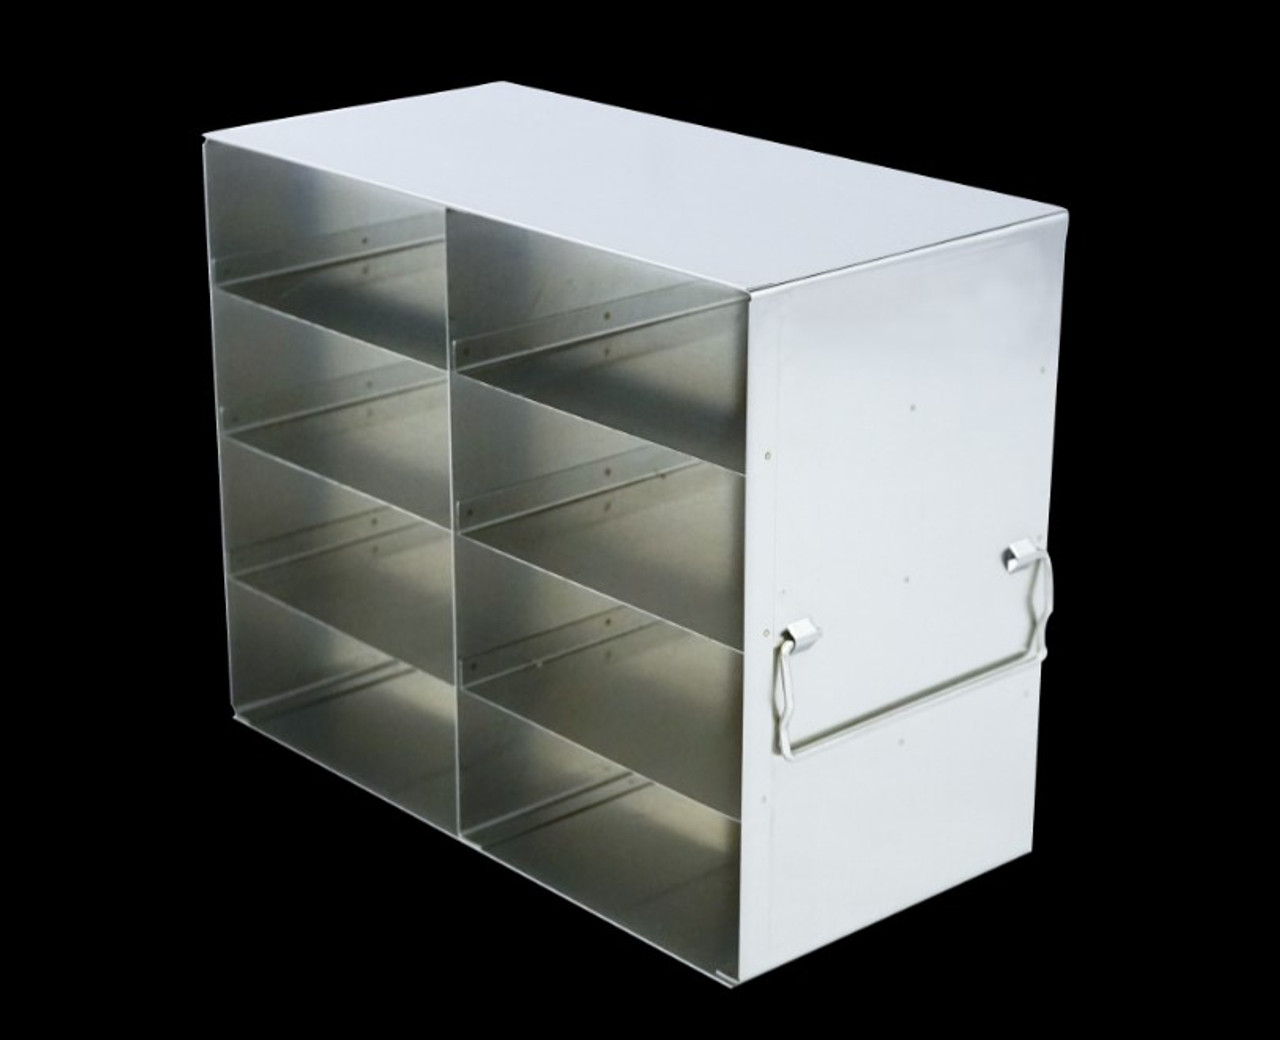 Countertop Shelf Rack - 20L x 12D x 10H